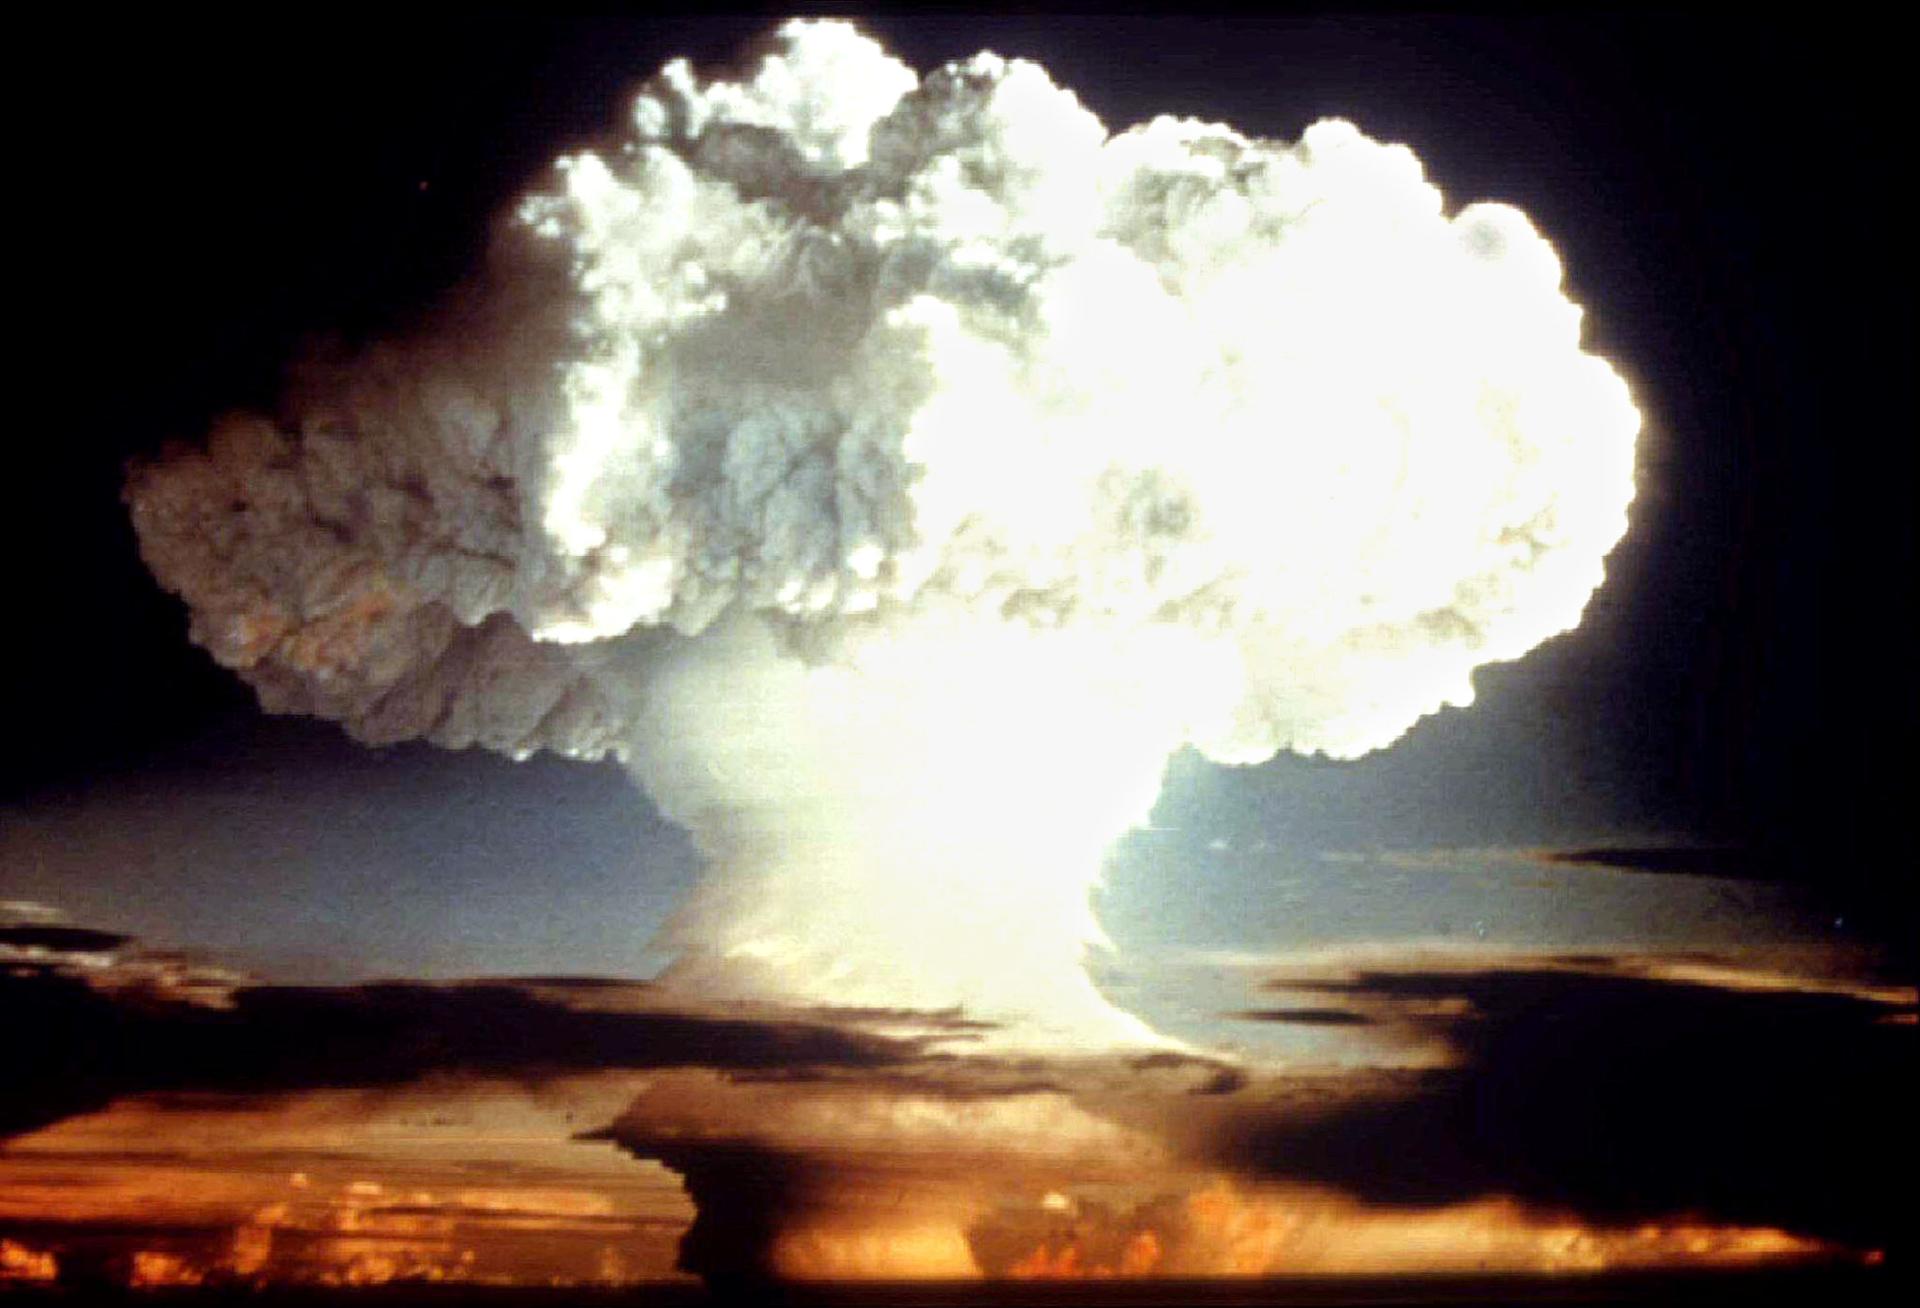 A mushroom cloud from a nuclear bomb.